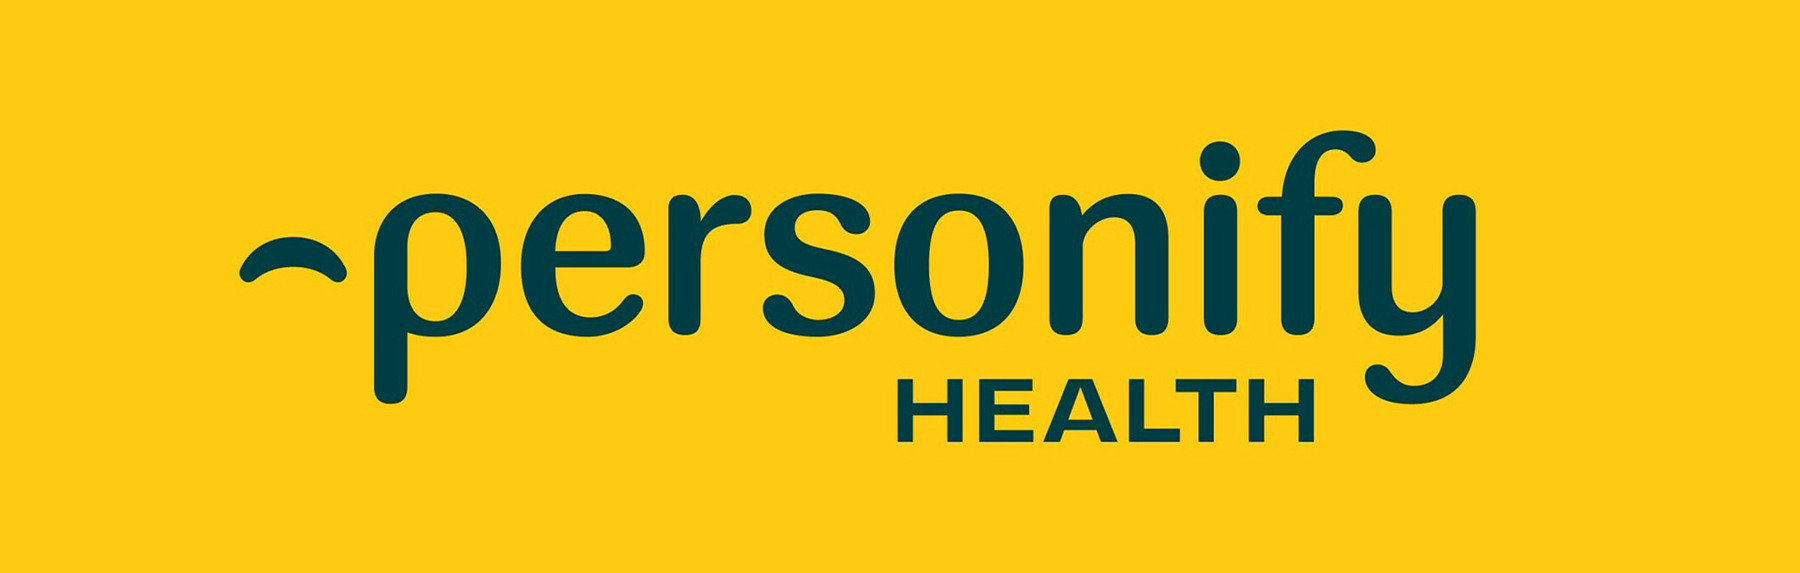 Personify Health logo